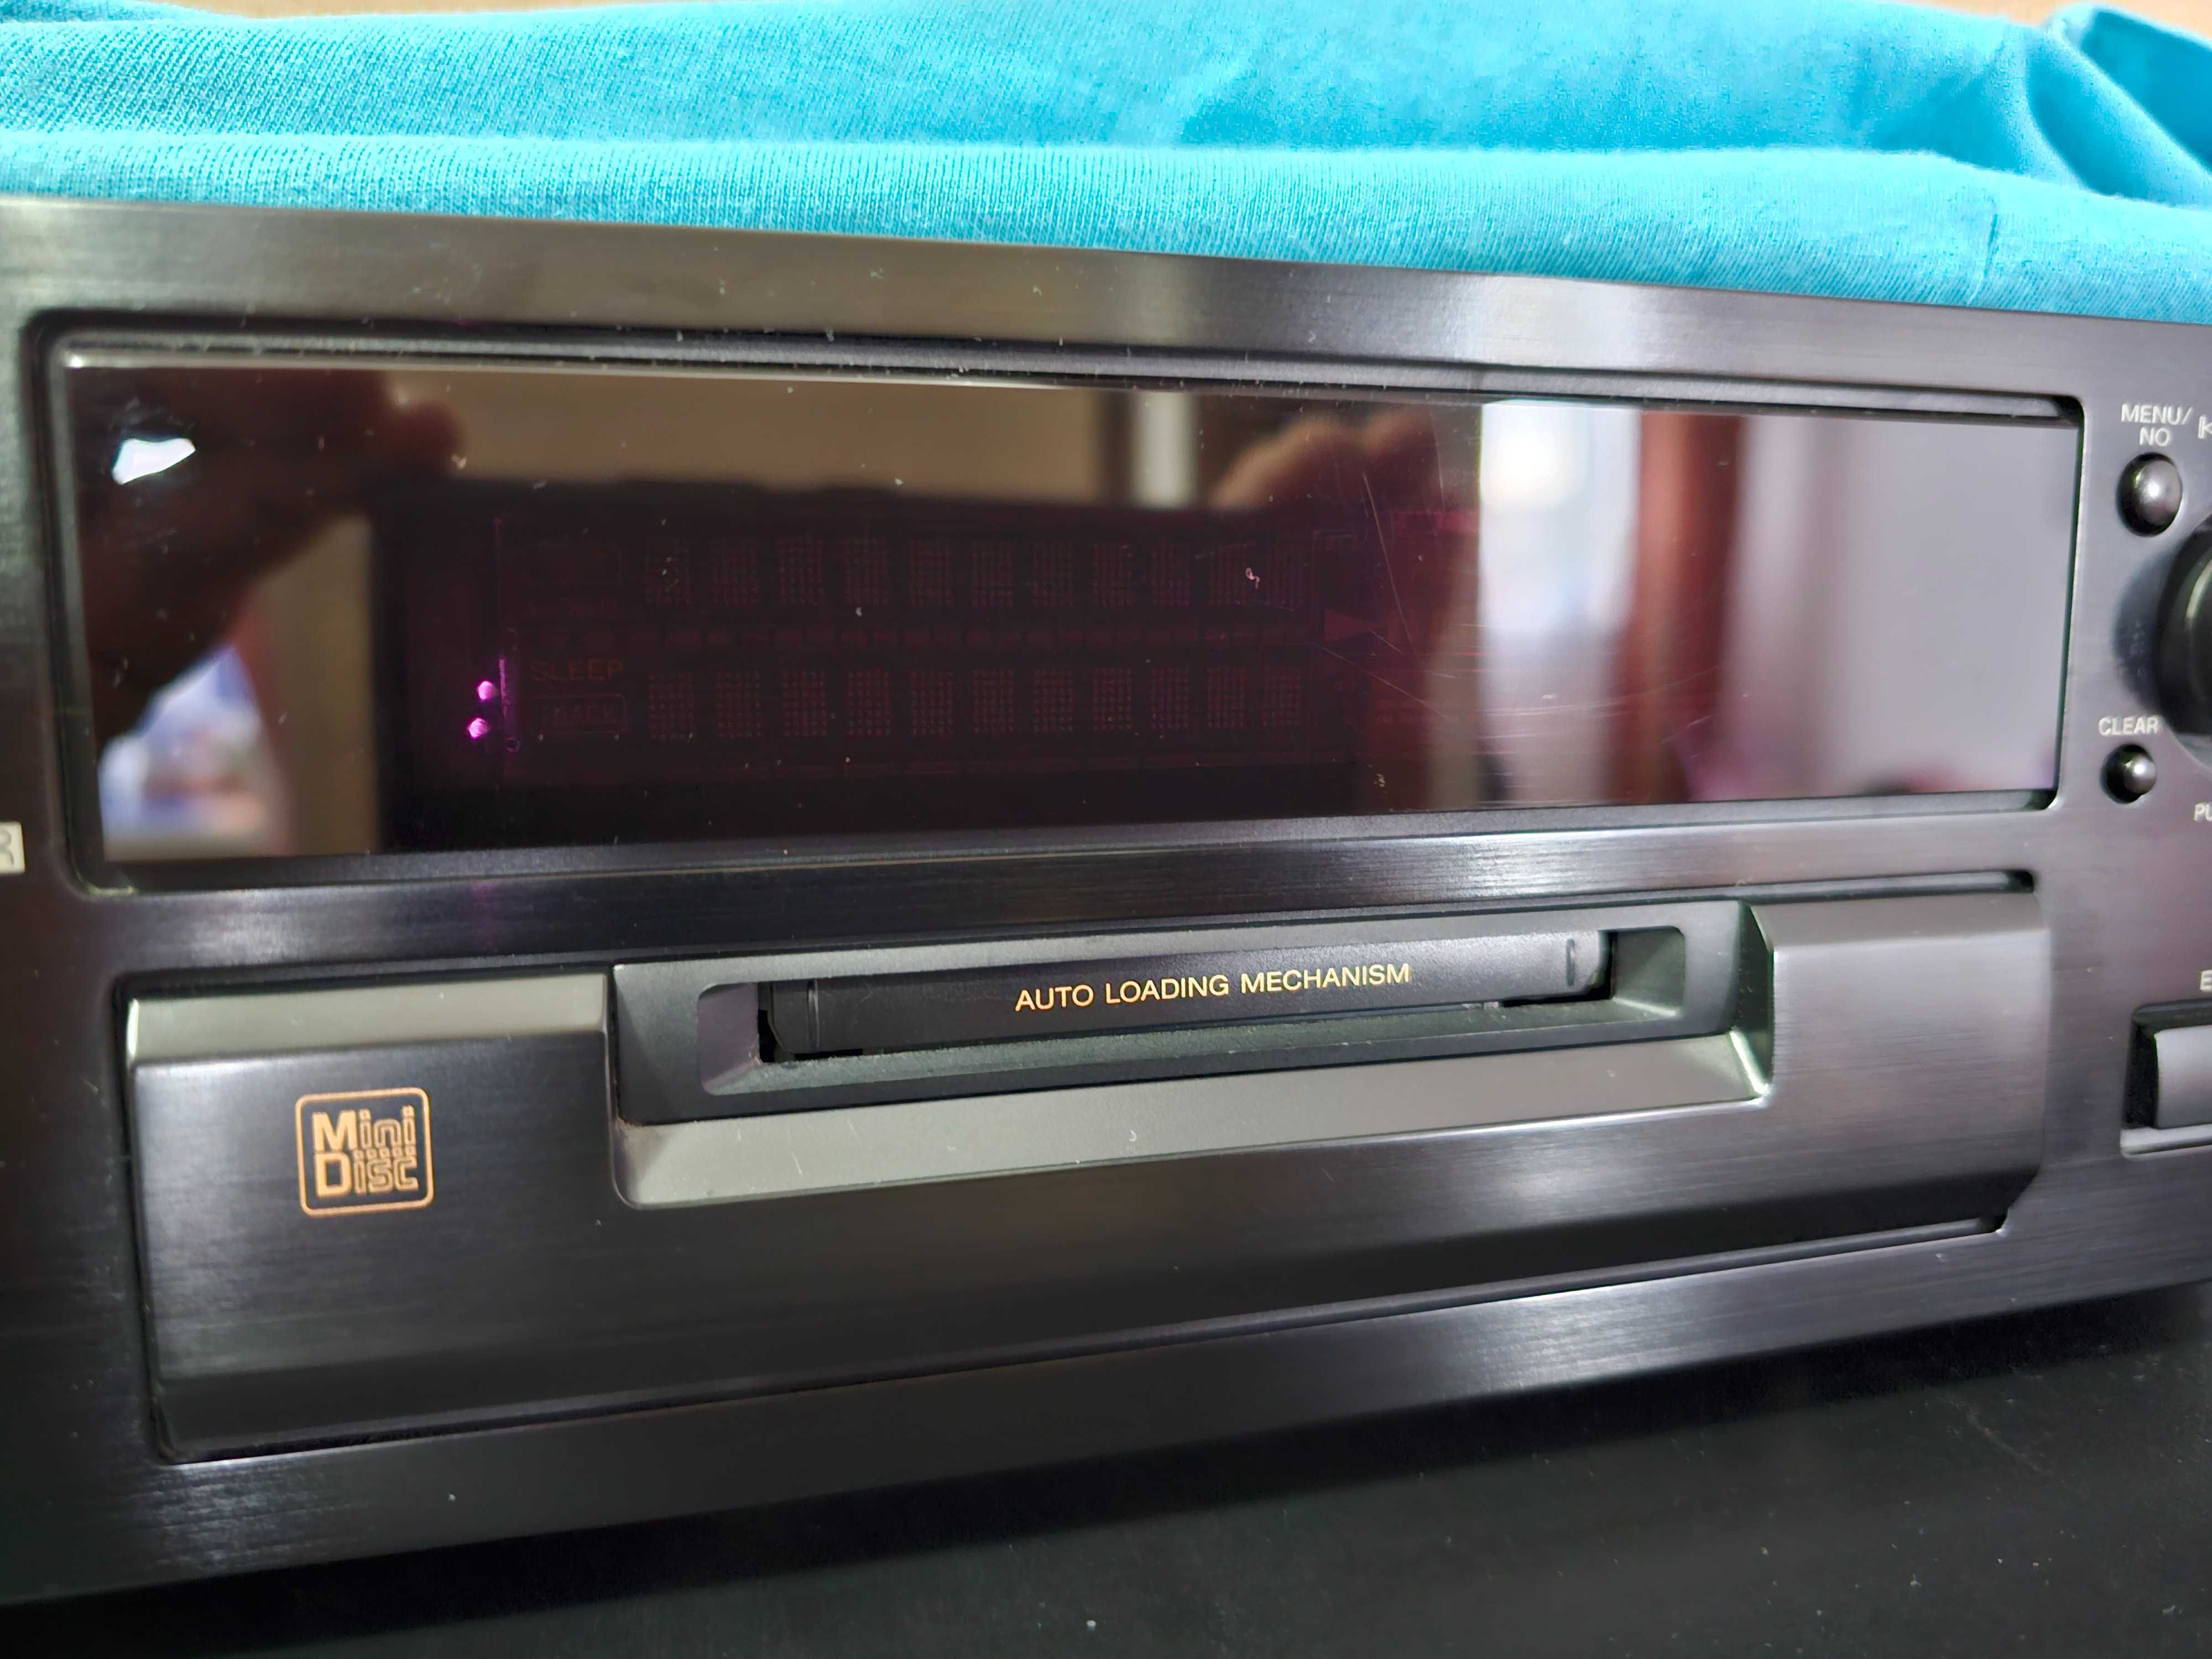 Sony MDS-JB 920 minidisc player/recorder